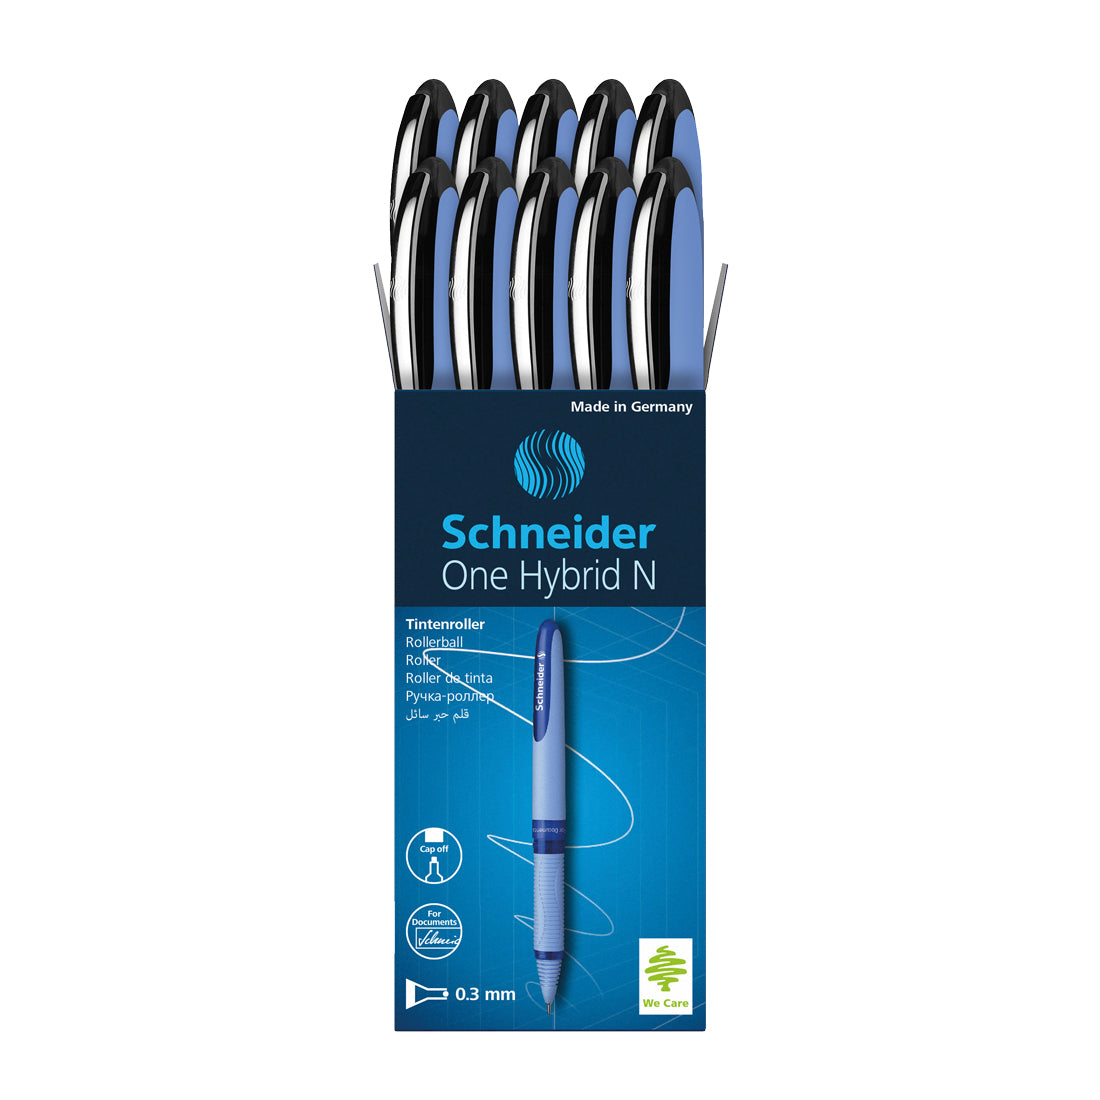 Schneider Take 4 138003 Ballpoint Pen 4-Colour Blue